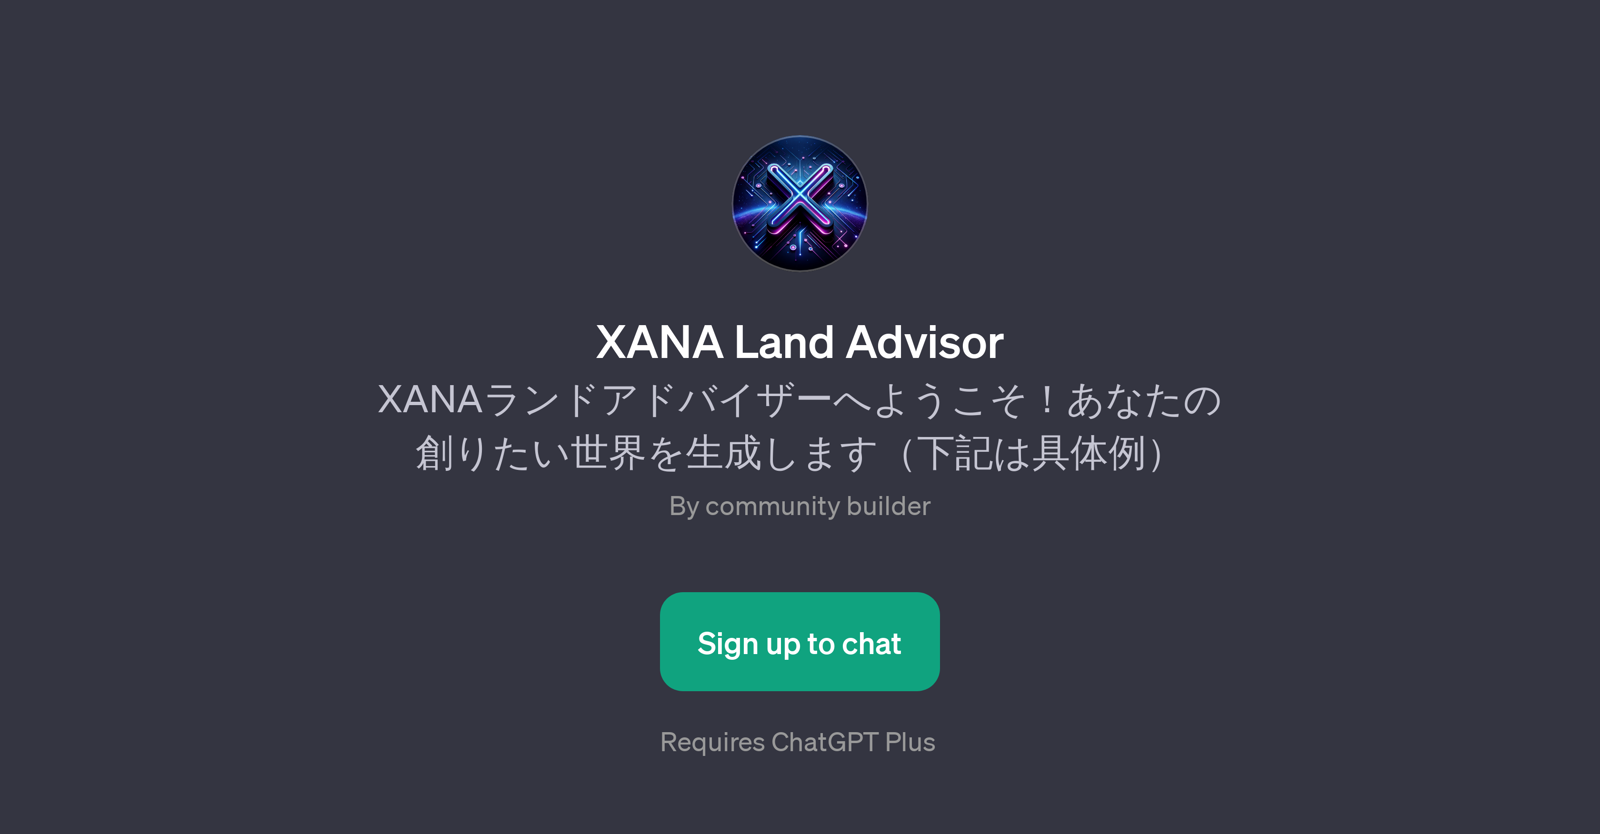 XANA Land Advisor website